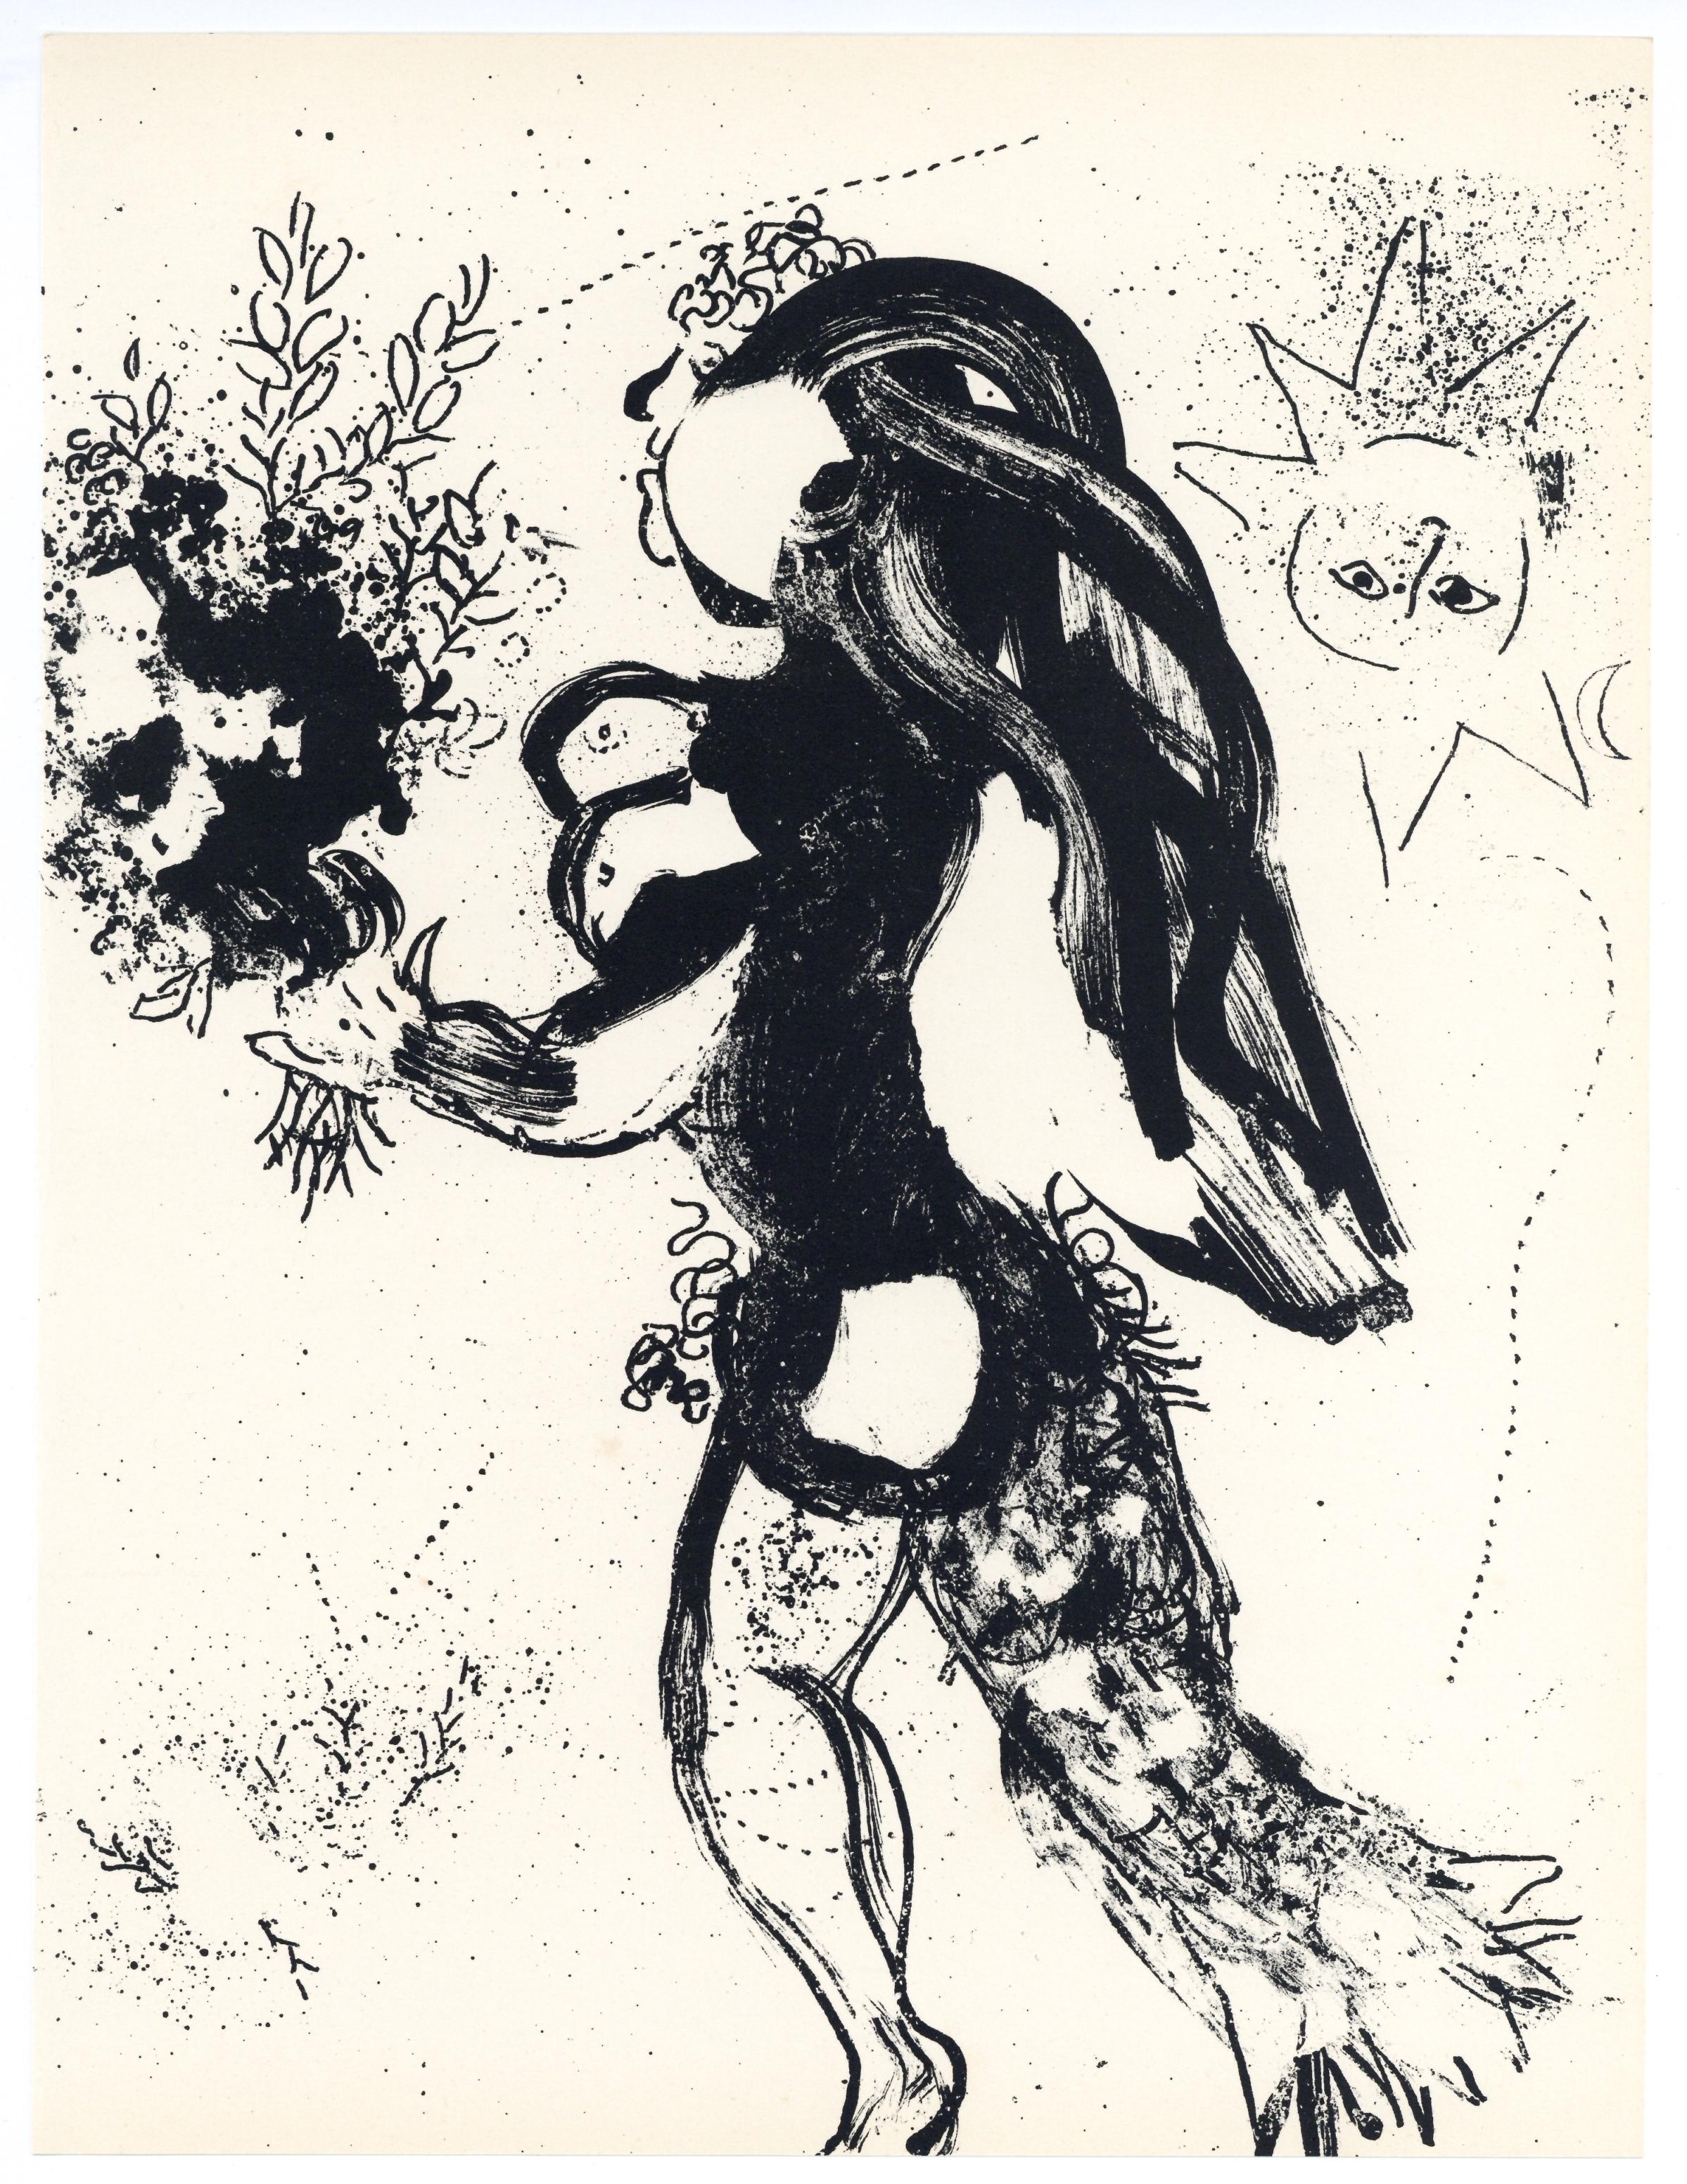 Marc Chagall Portrait Print - "L'Offrande" original lithograph